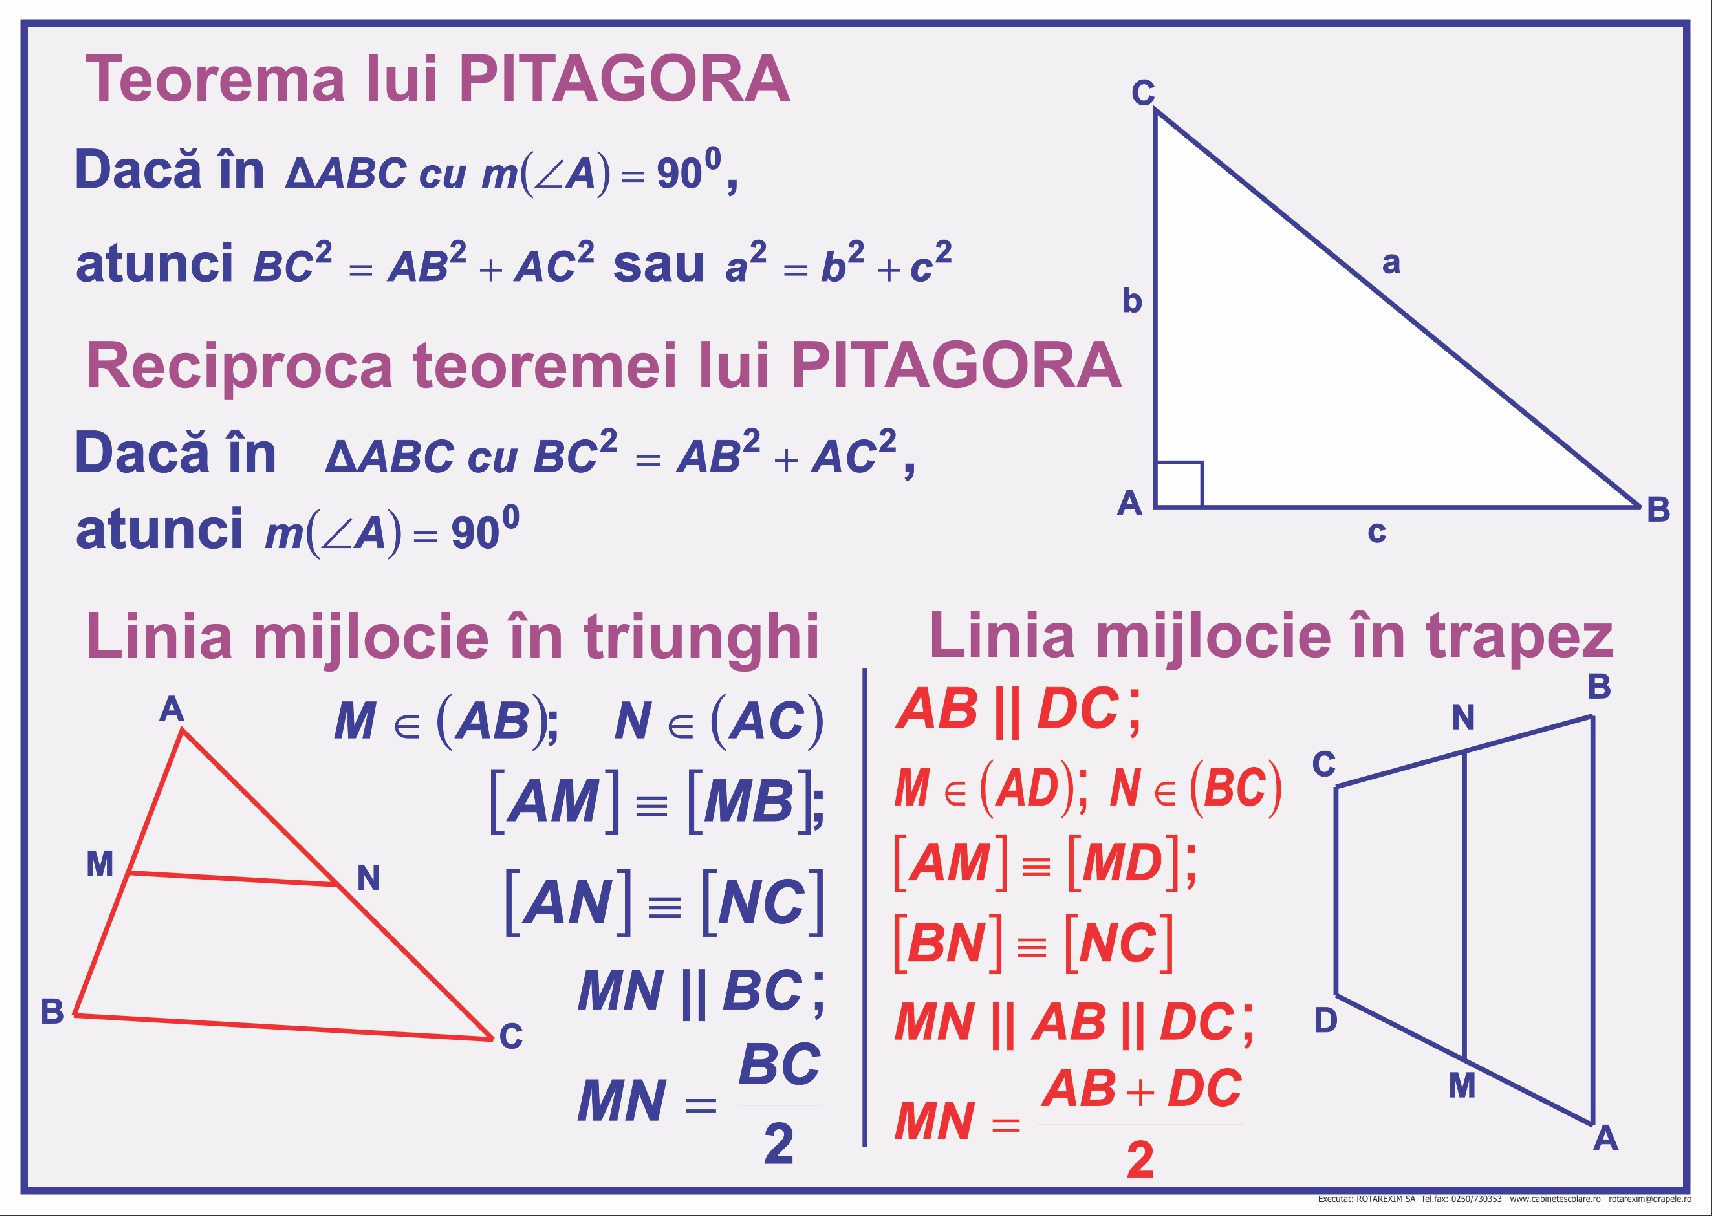 Teorema lui Pitagora.